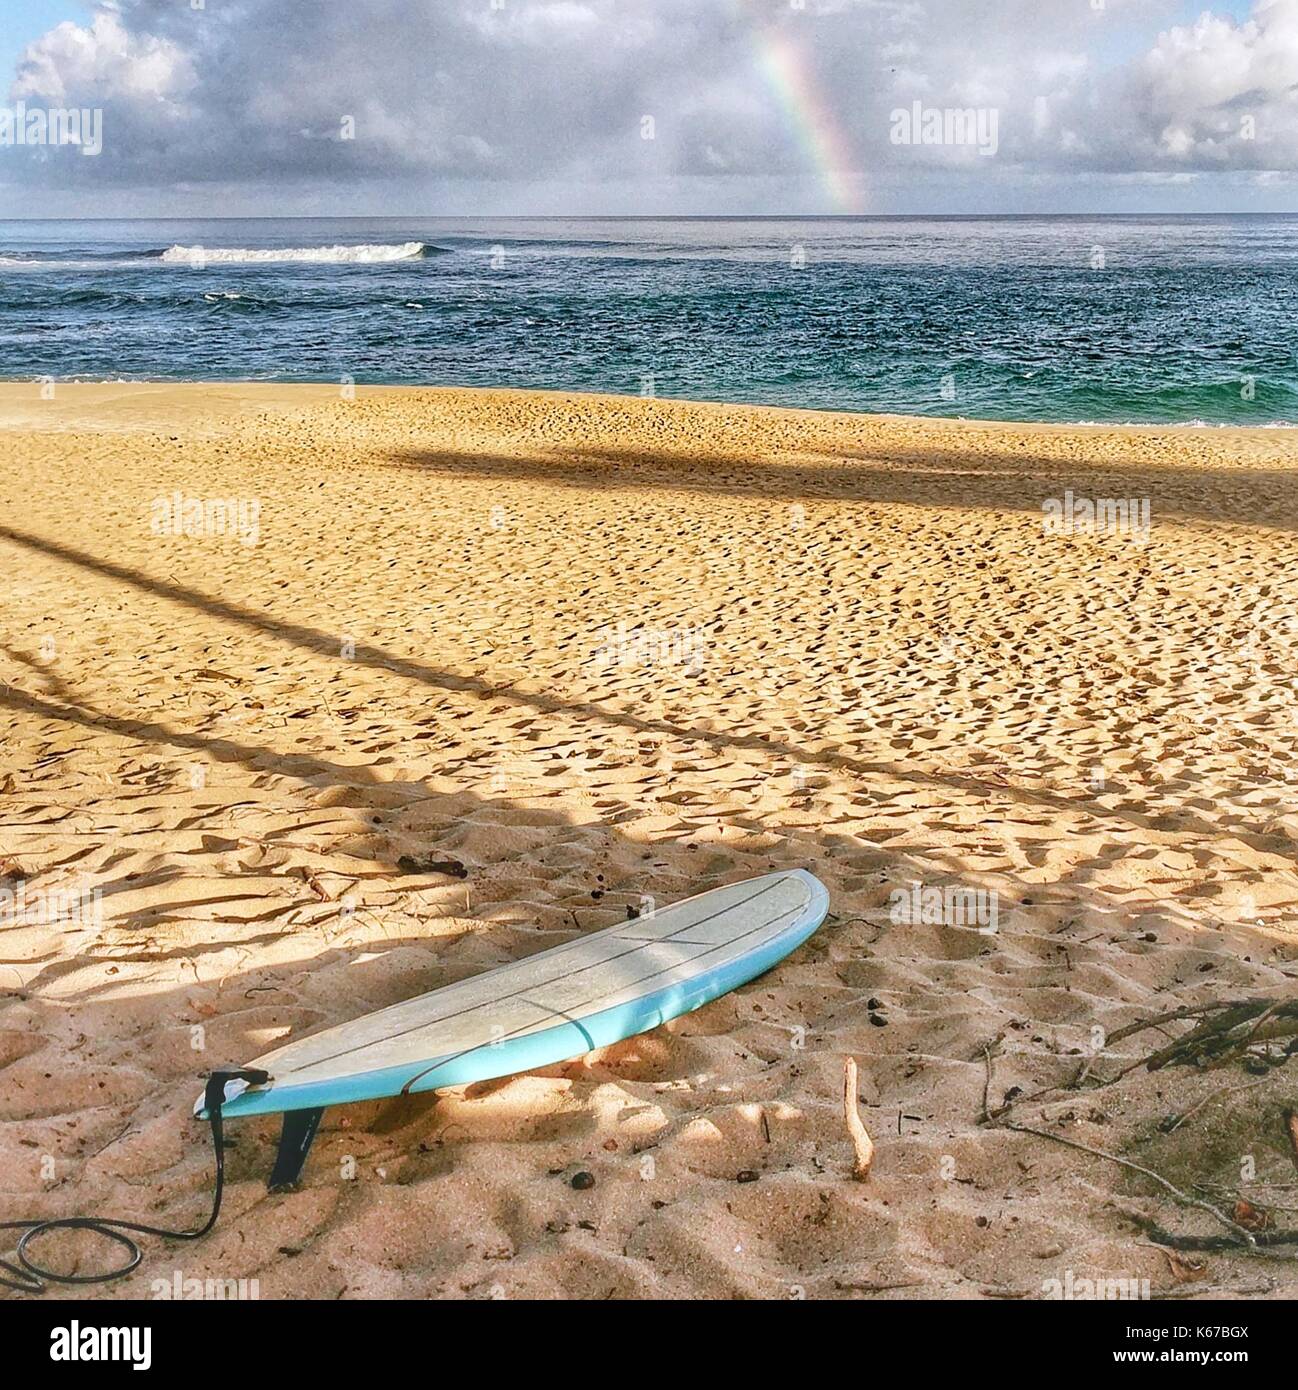 Surfboard on the beach, Hawaii, United States Stock Photo